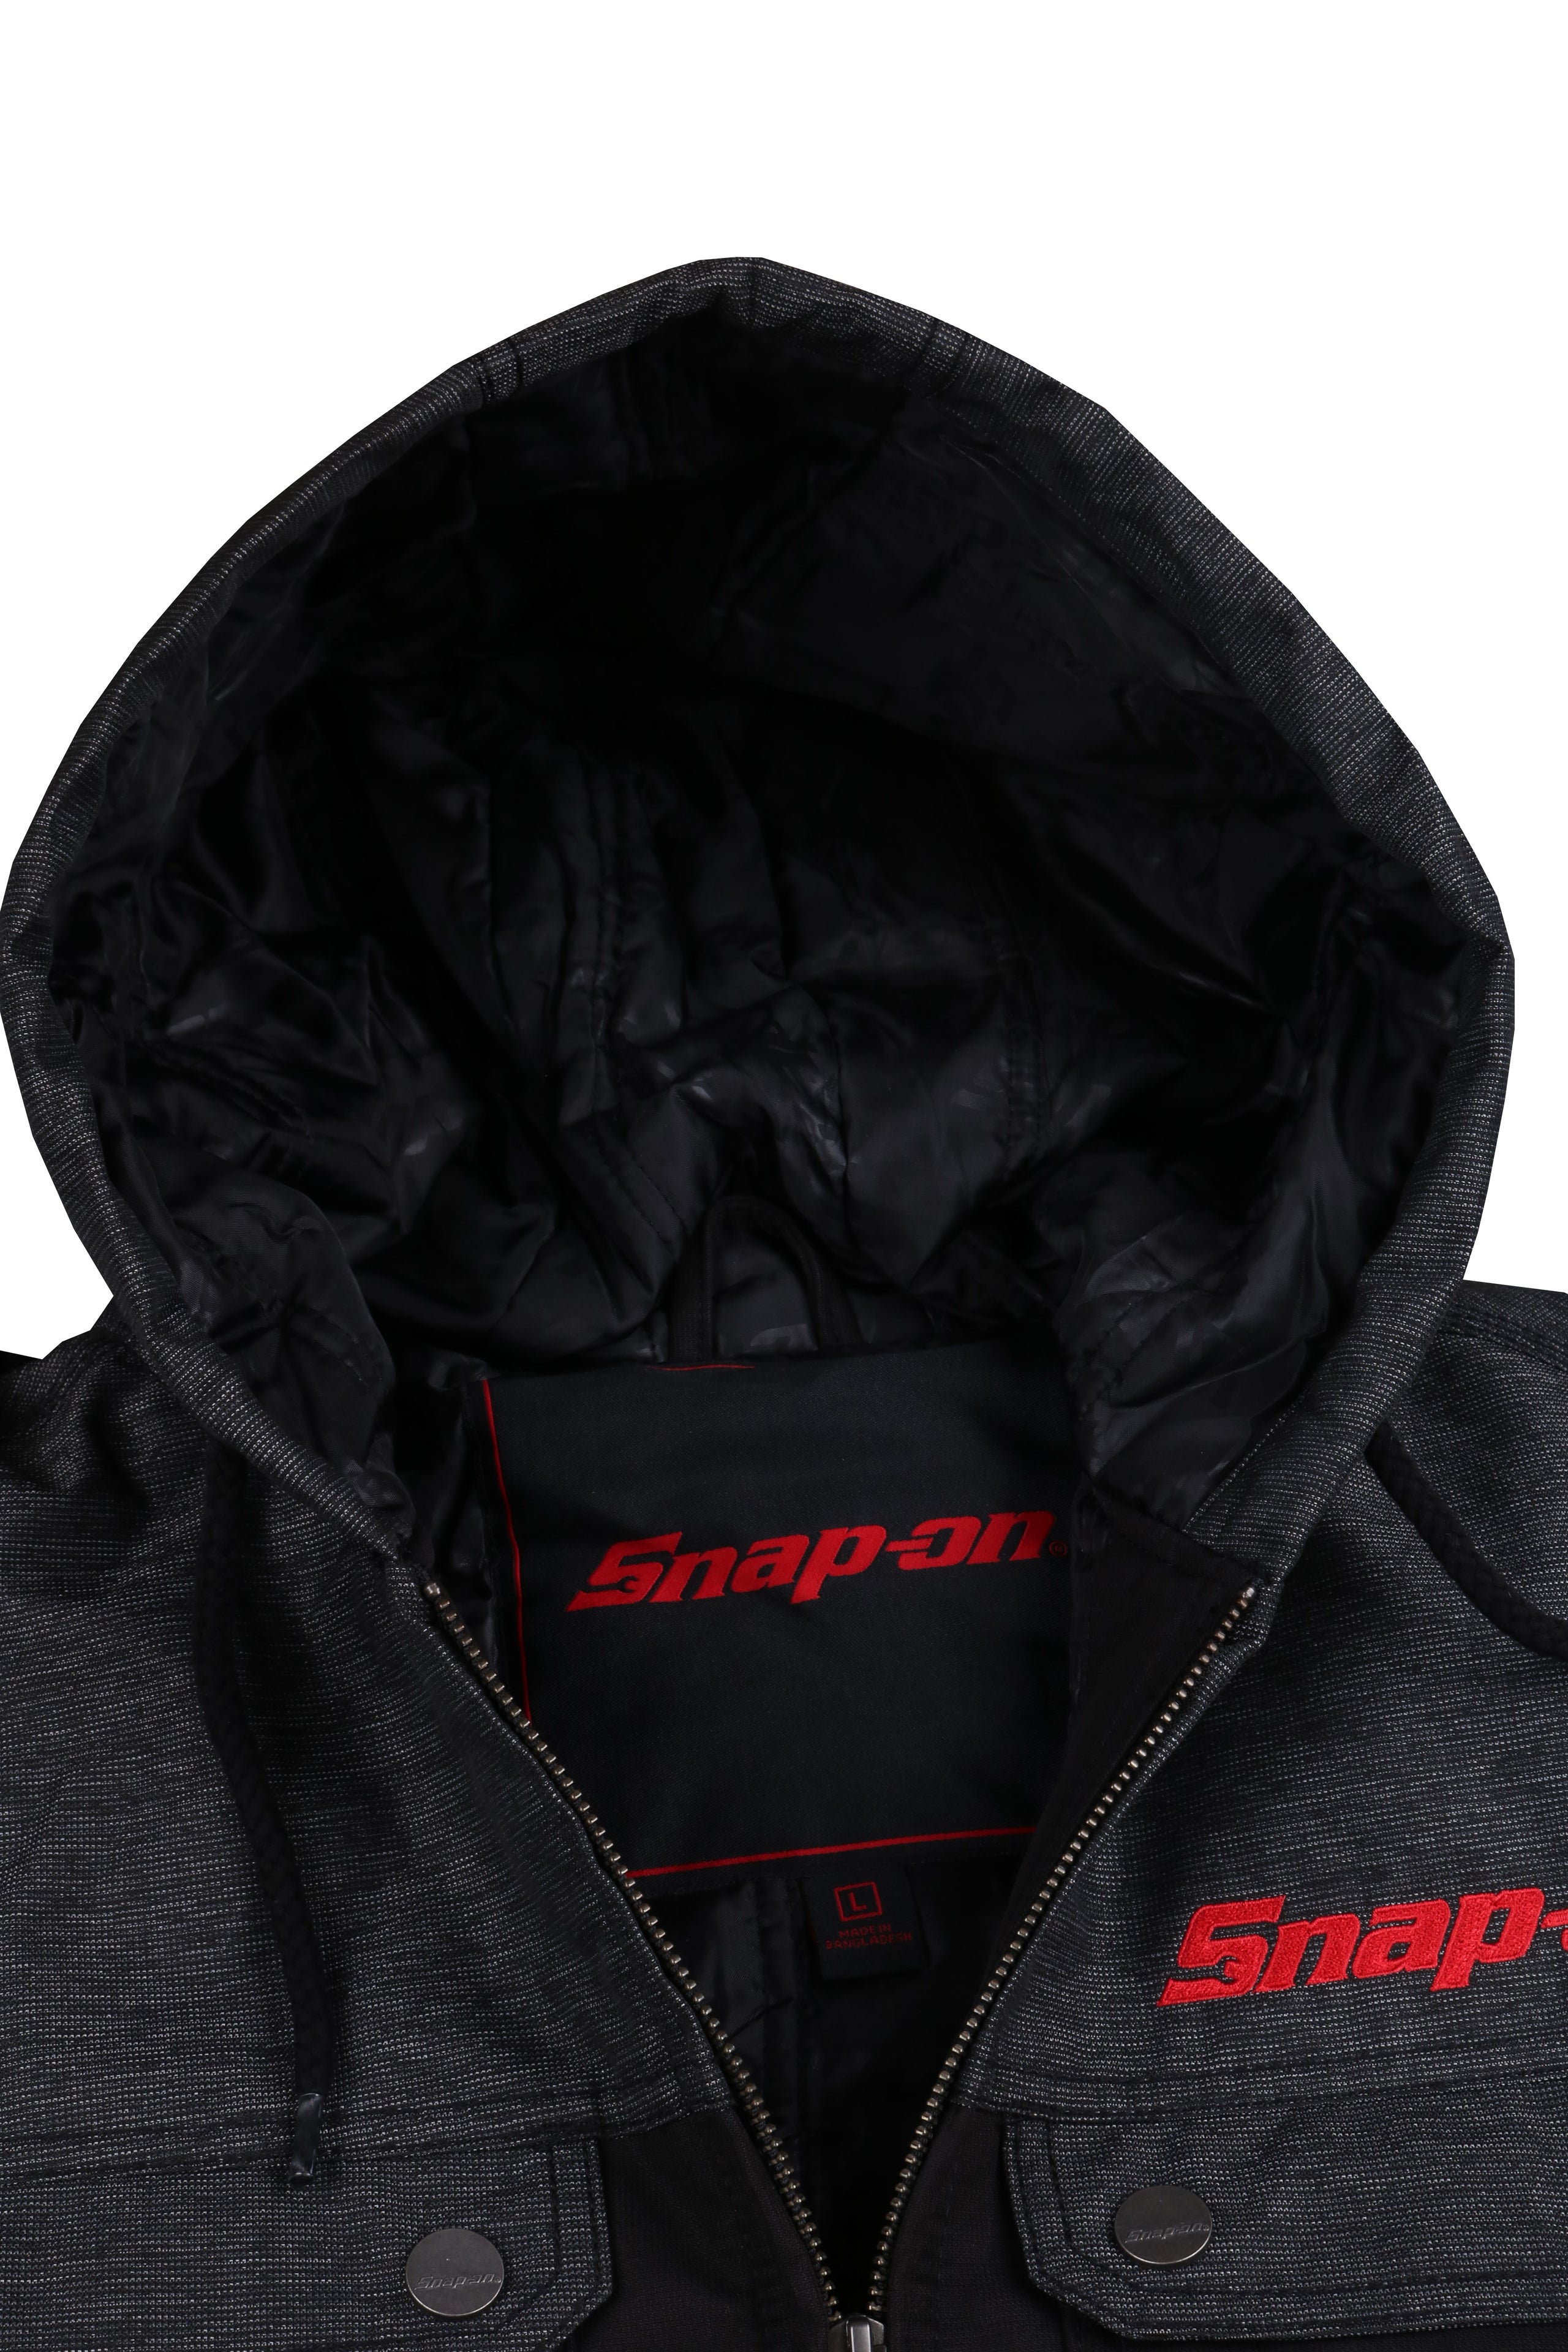 Snap-on jacket hooded | Snap-On Tools